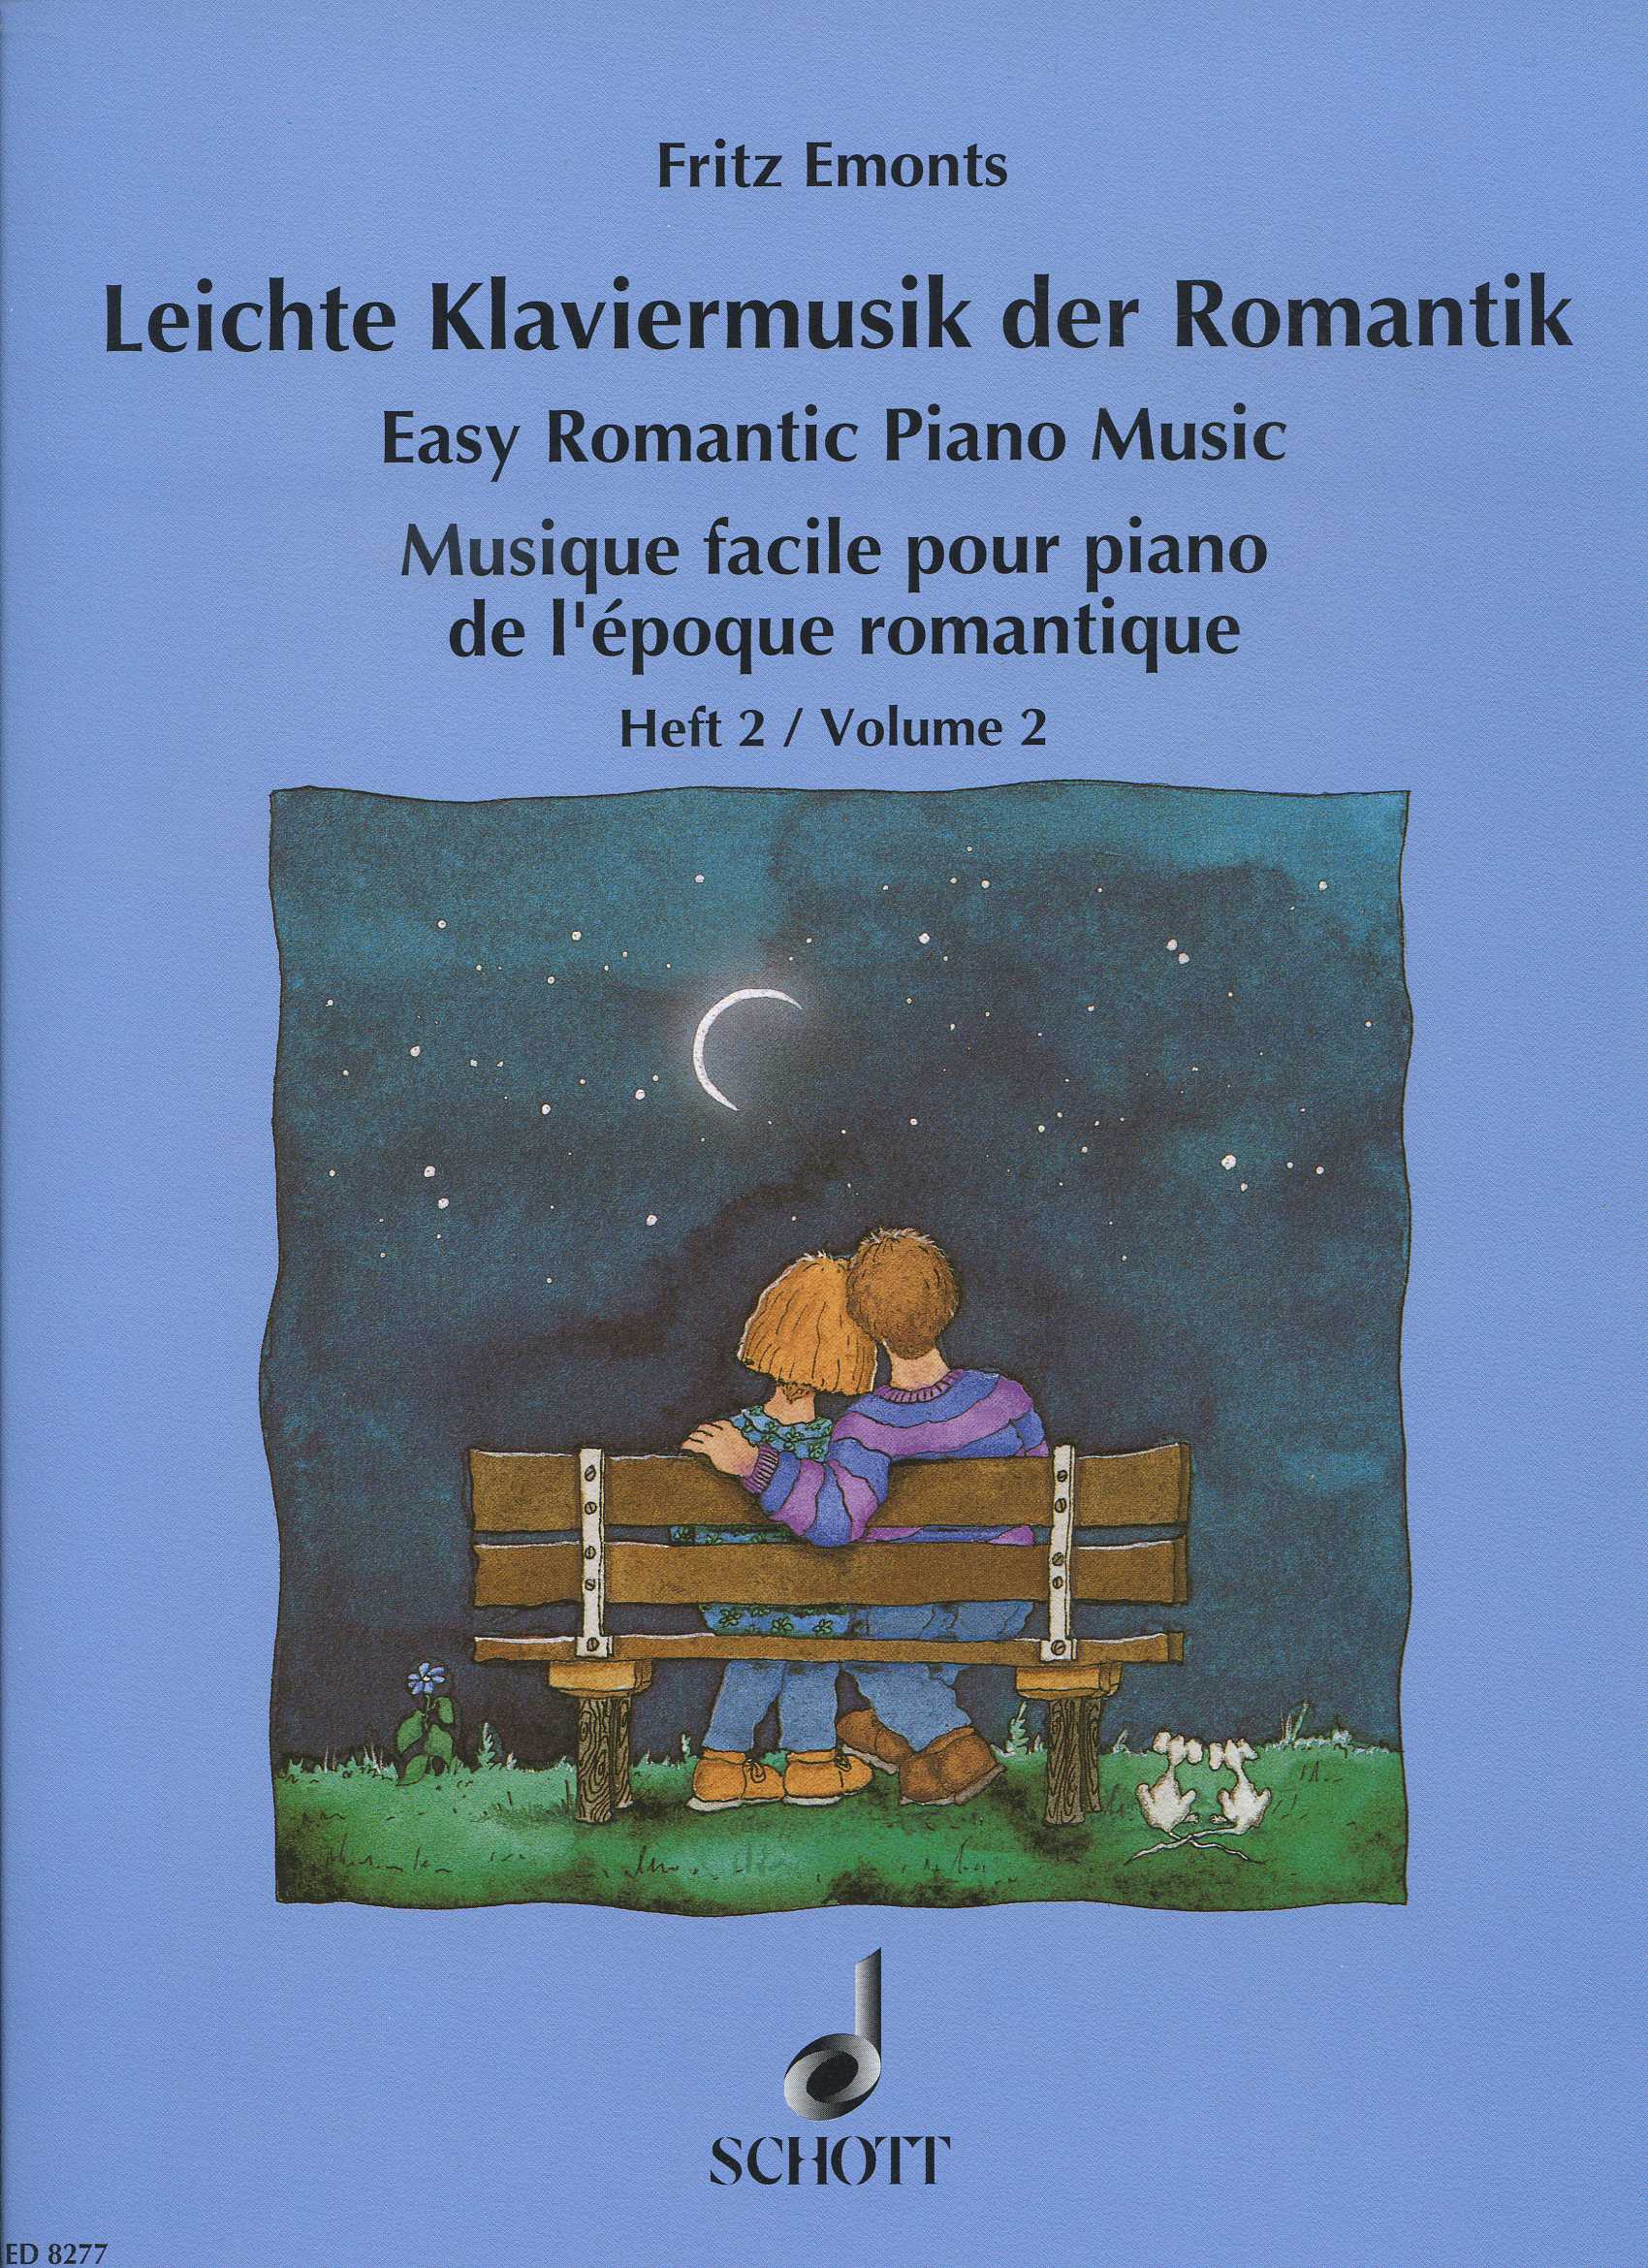 Leichte Klaviermusik der Romantik / easy romantic piano music